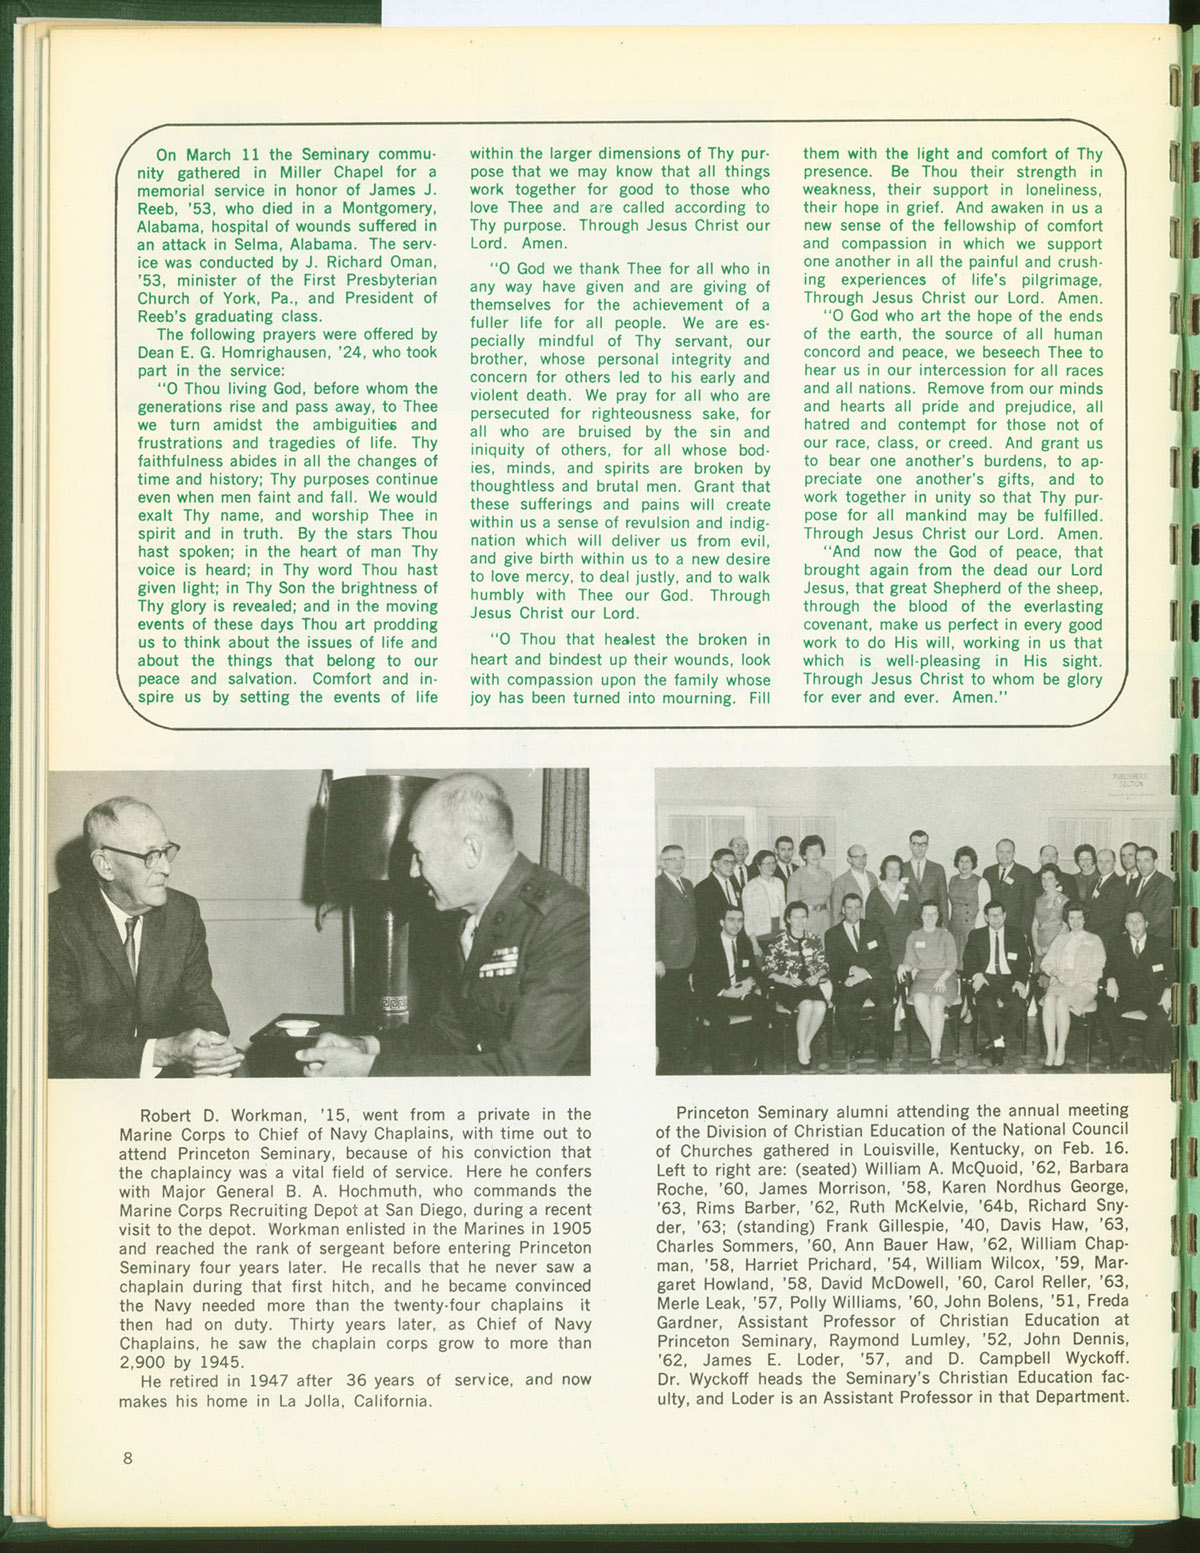 Alumni News, Spring 1965